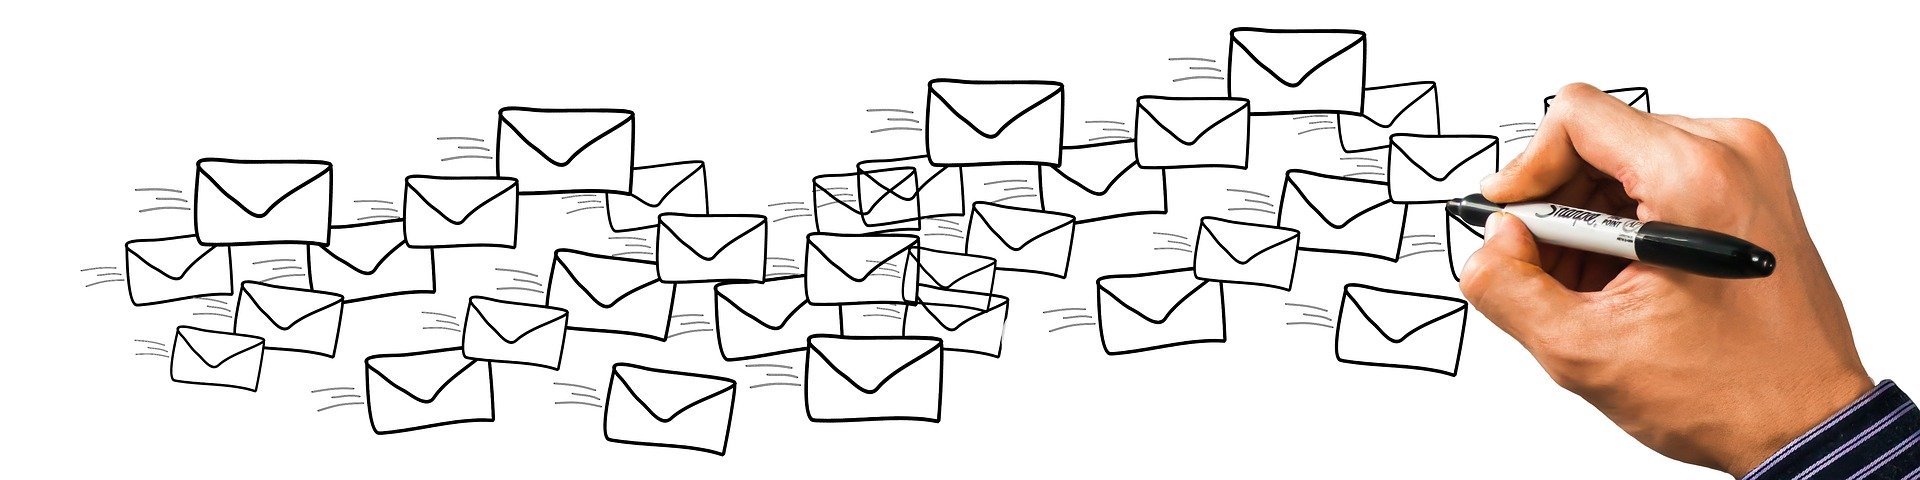 Enveloppes symbolisant l'emailing